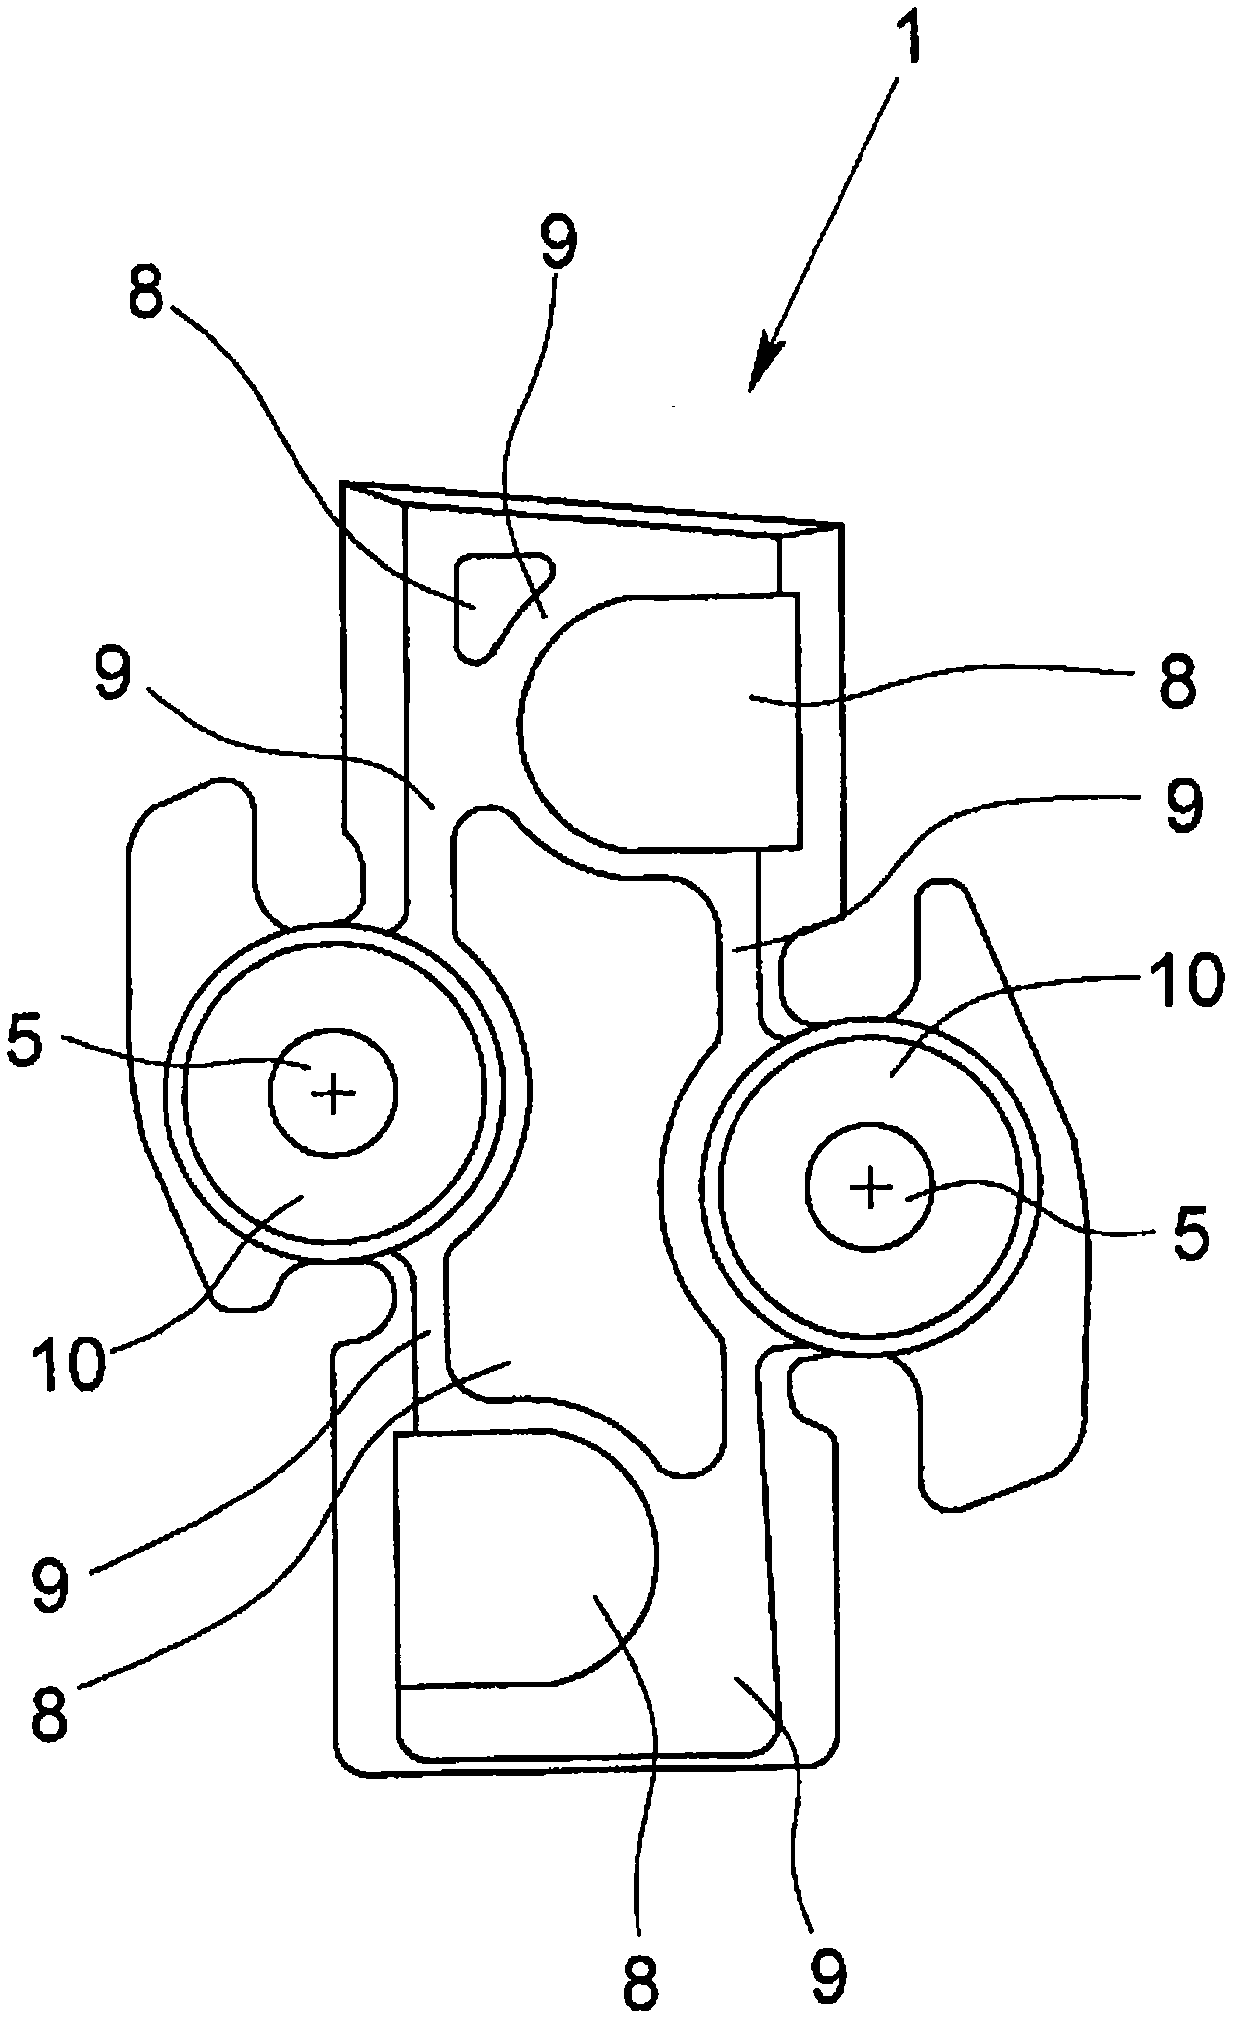 Brake lining for a disc brake and brake lining system